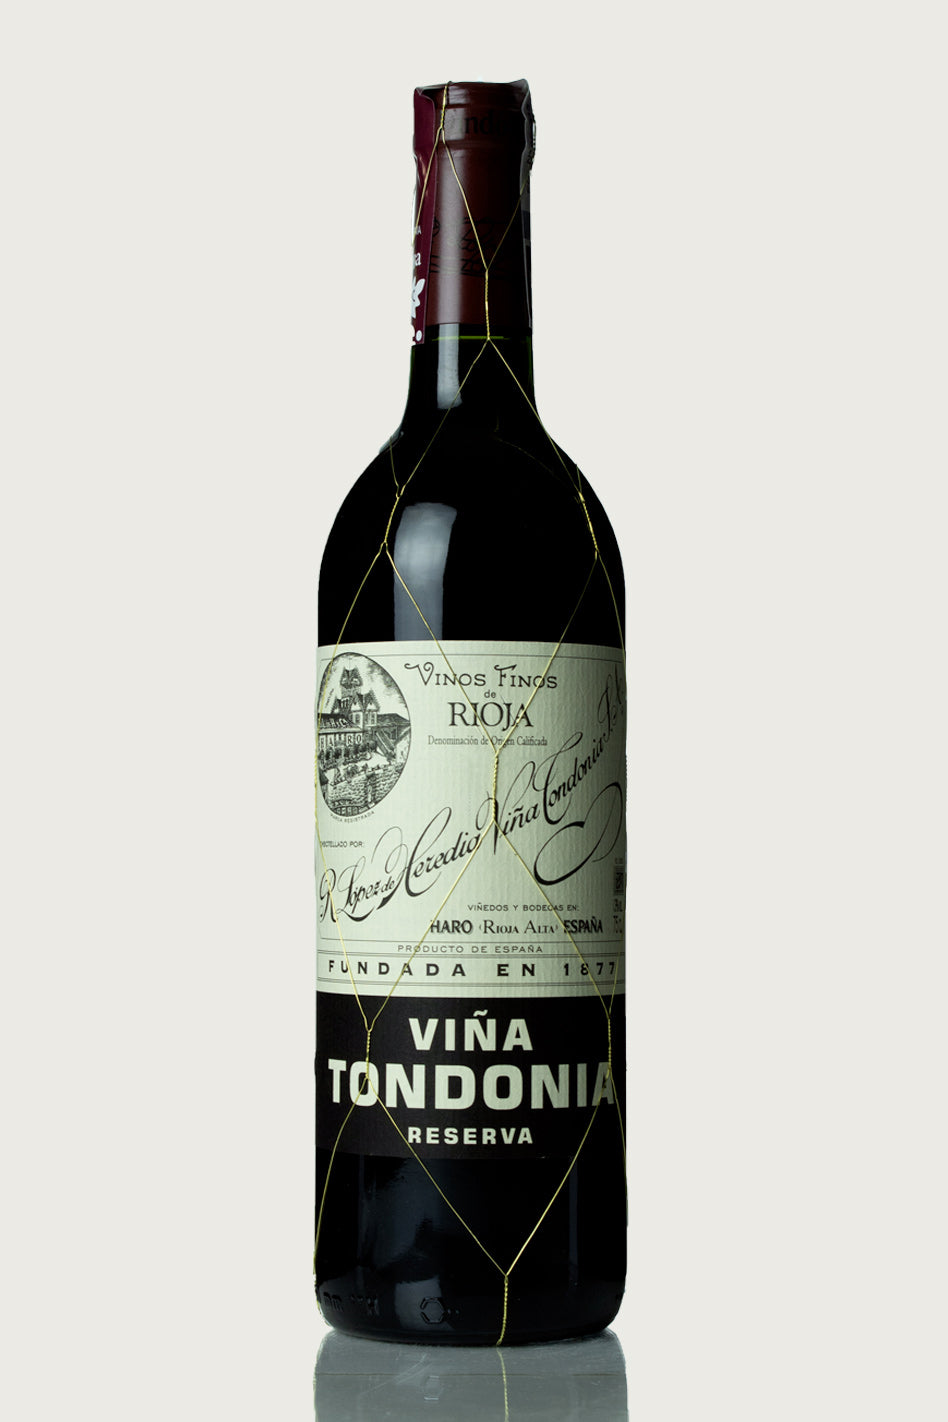 López de Heredia Viña Tondonia Rioja Reserva Tinto 2011